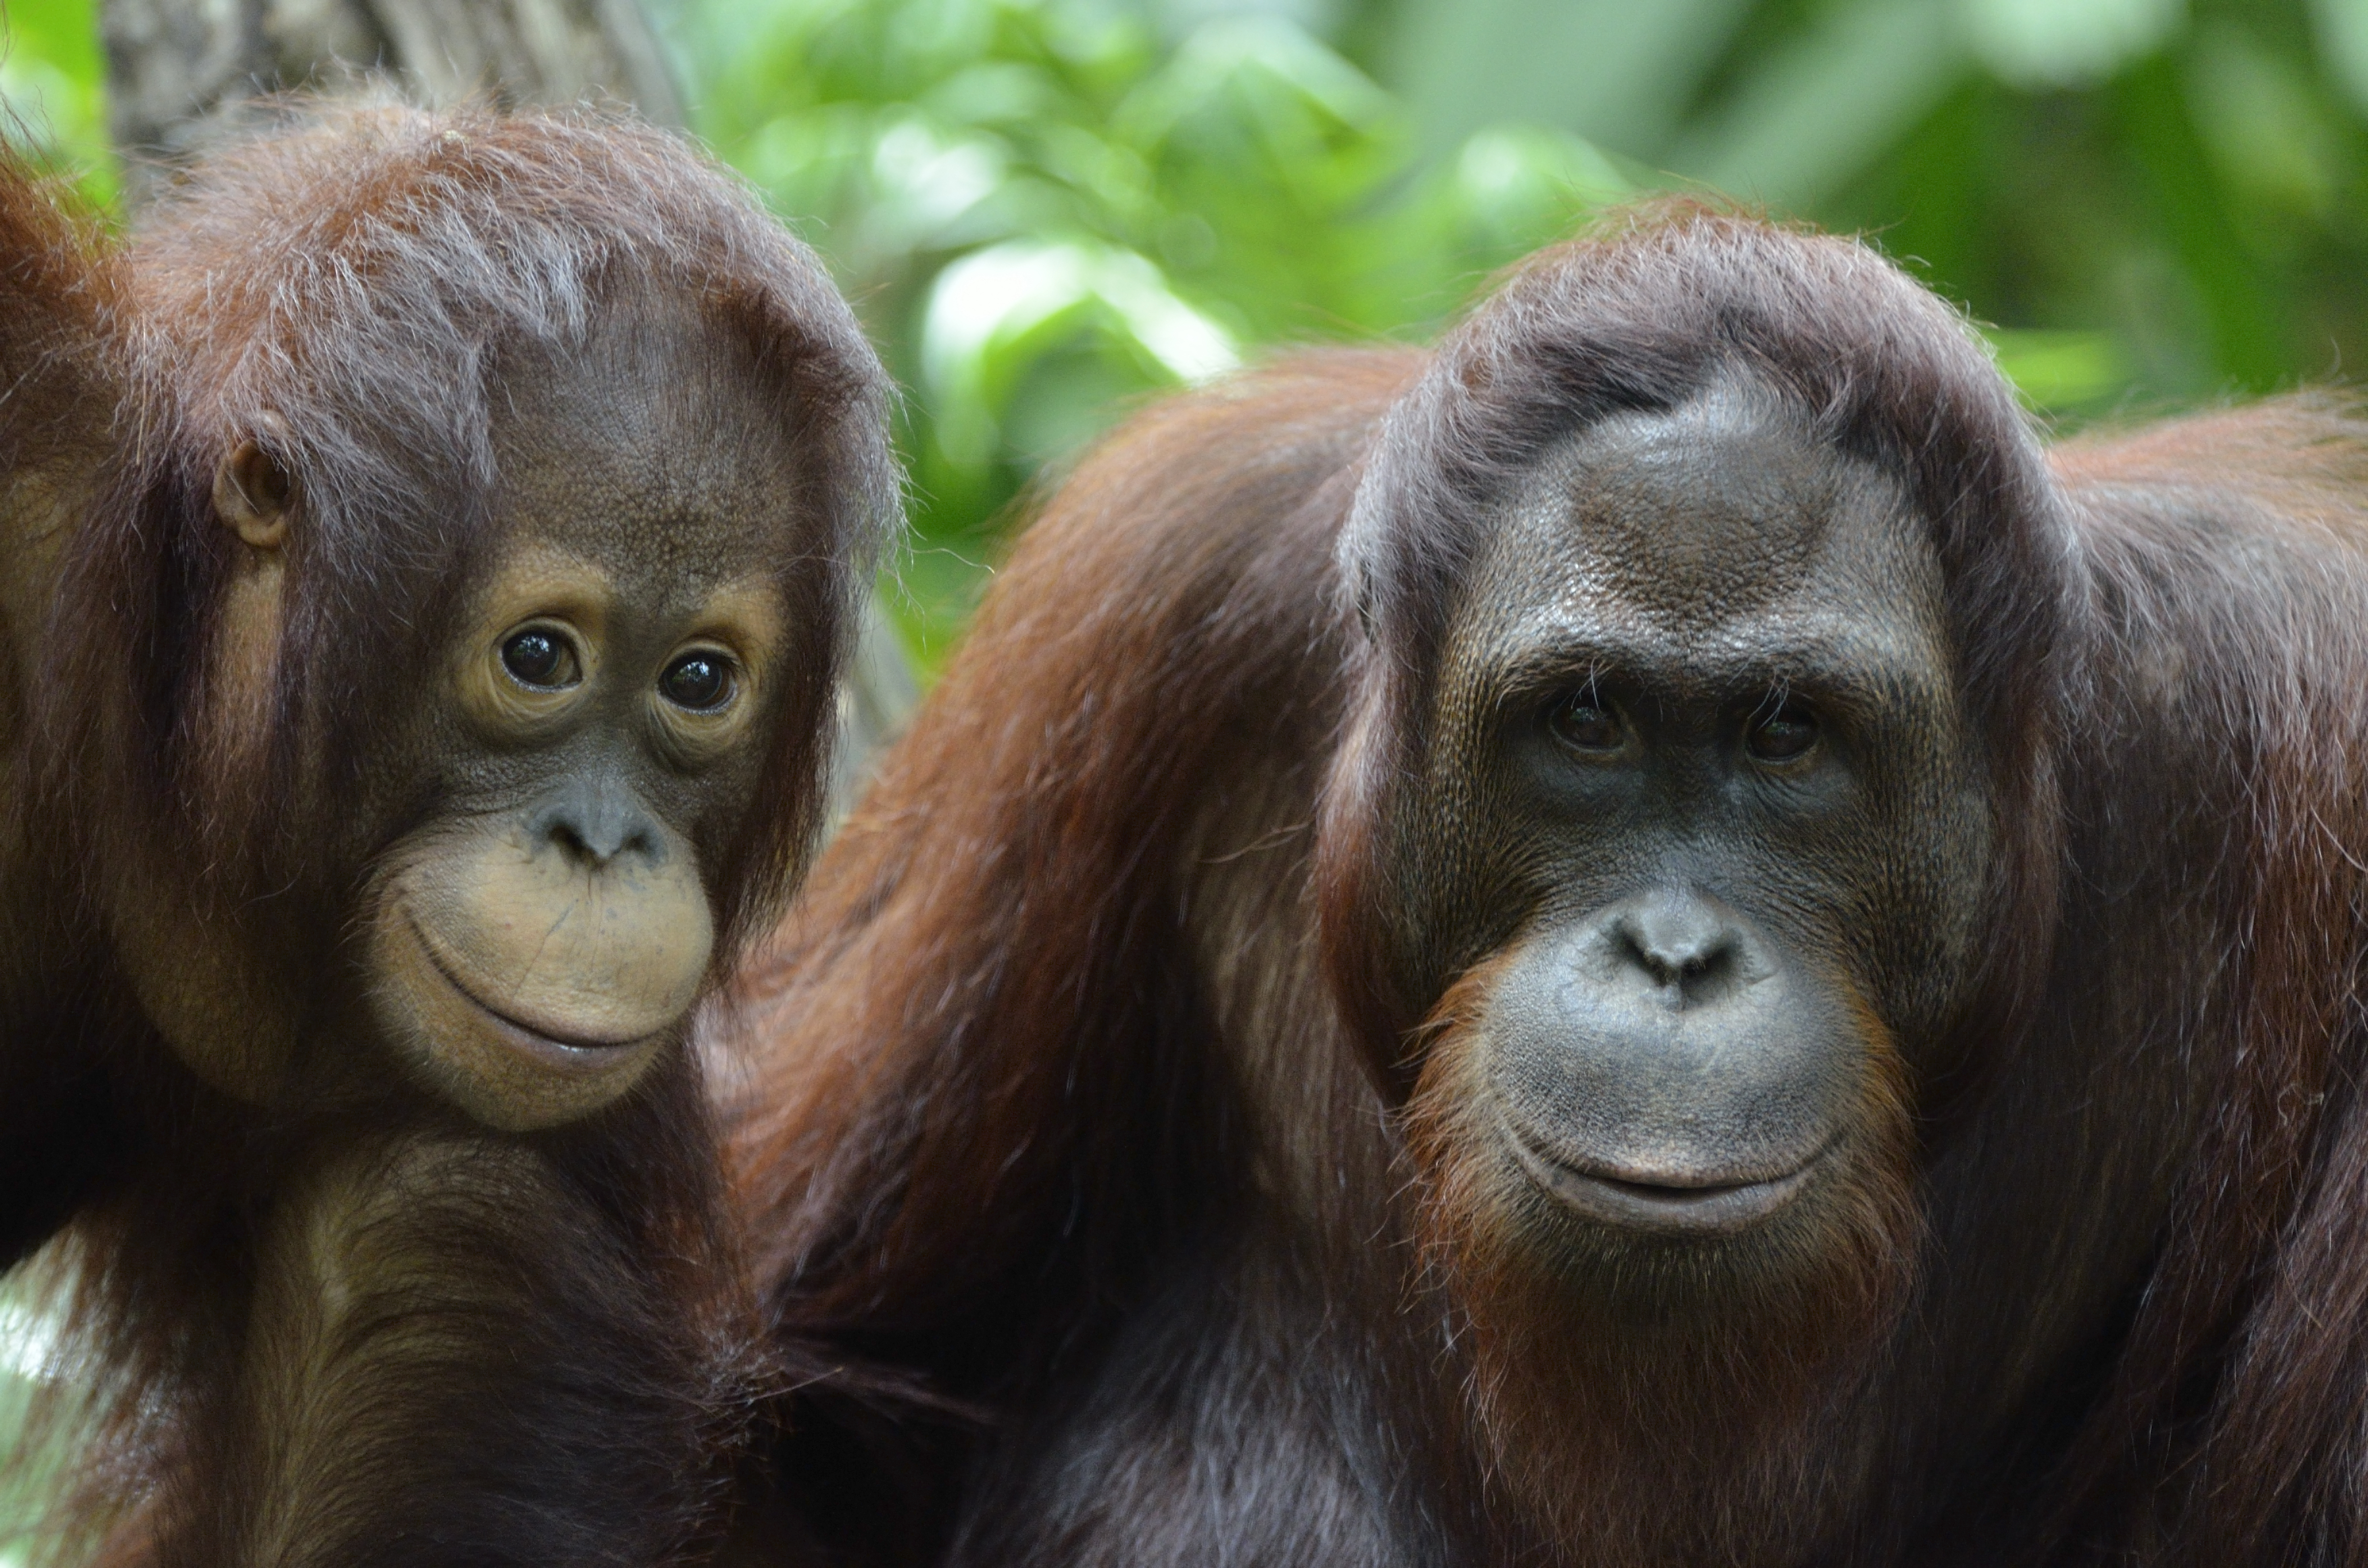  Orangutan  ss88503019 Borneo Orangutan  Survival Australia